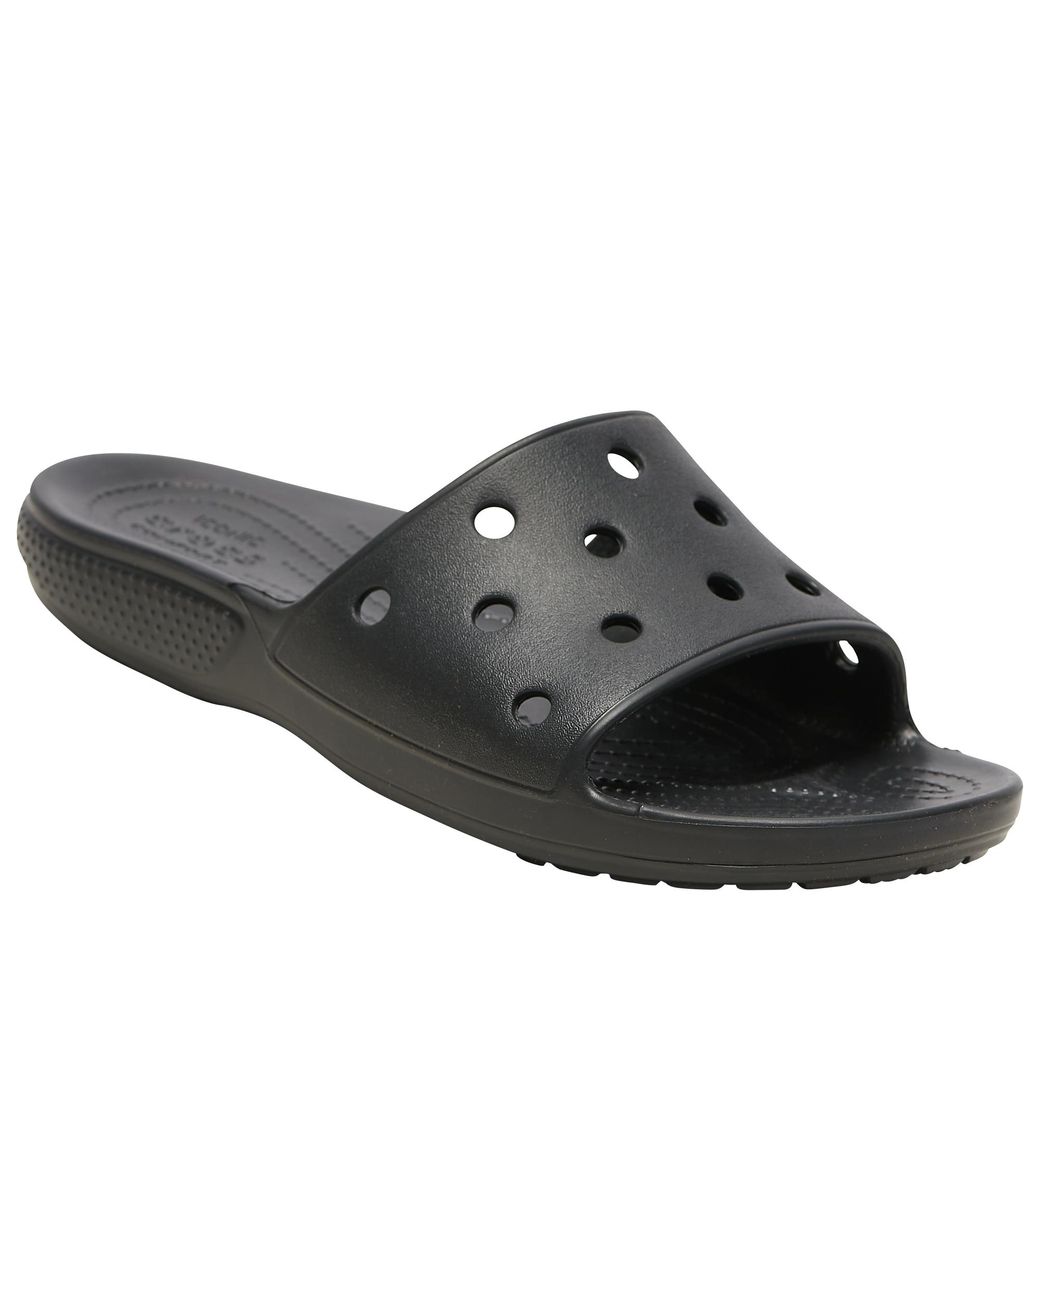 Crocs™ Classic Slide in Black/Black (Black) - Lyst